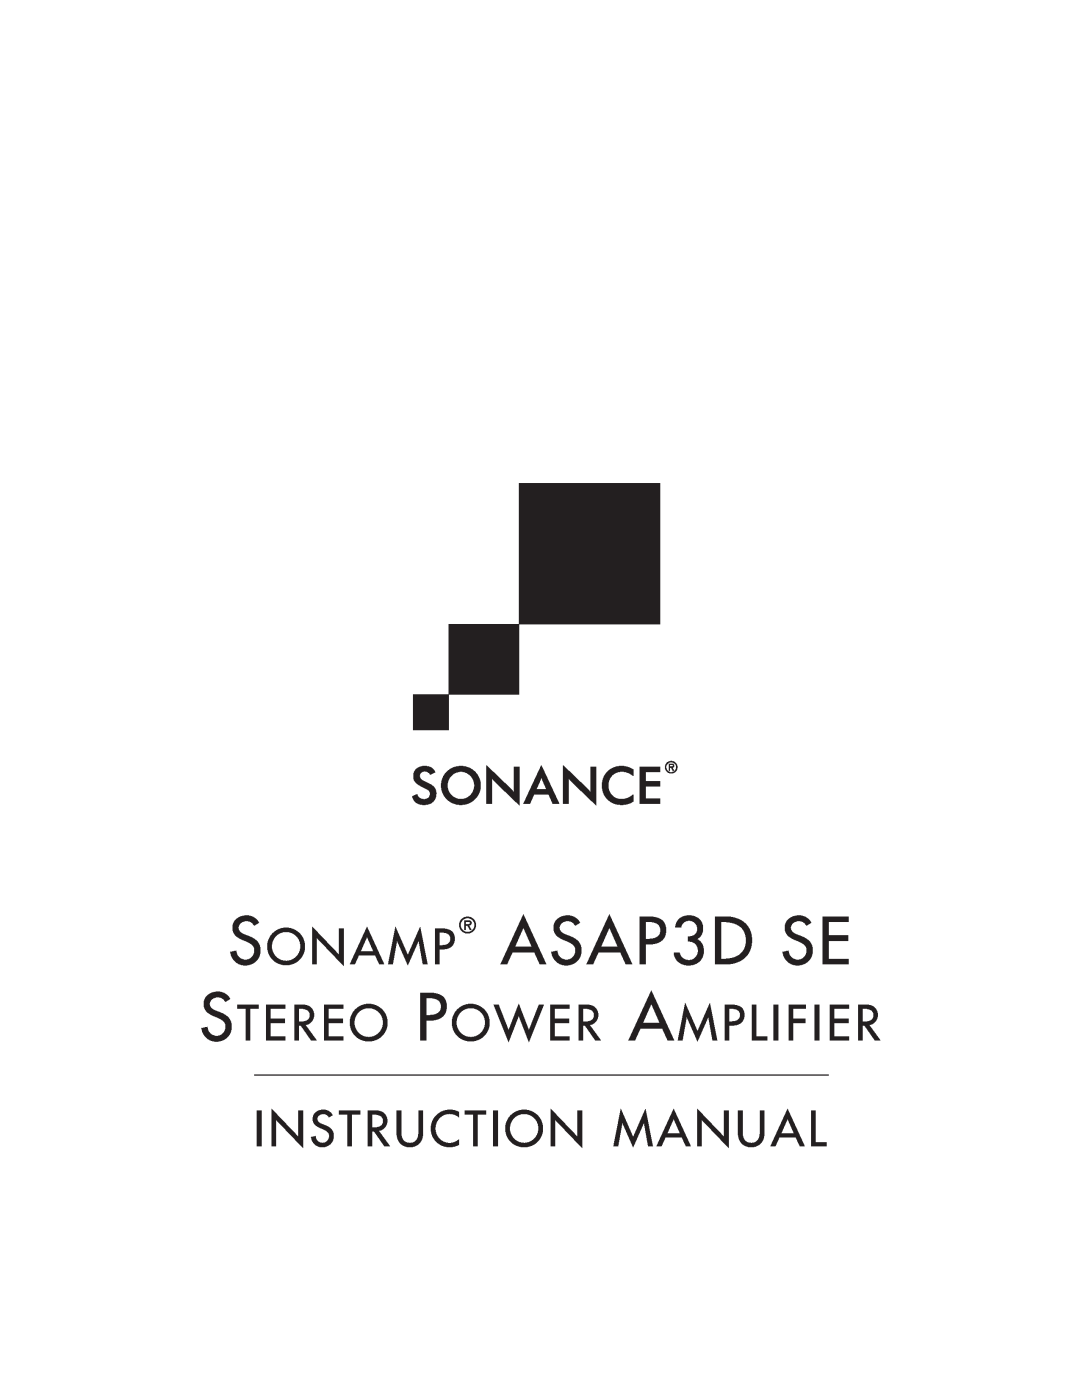 Sonance manual ASAP3D SE Stereo Power Amplifier, Features, Sonamp Power Amplifiers 